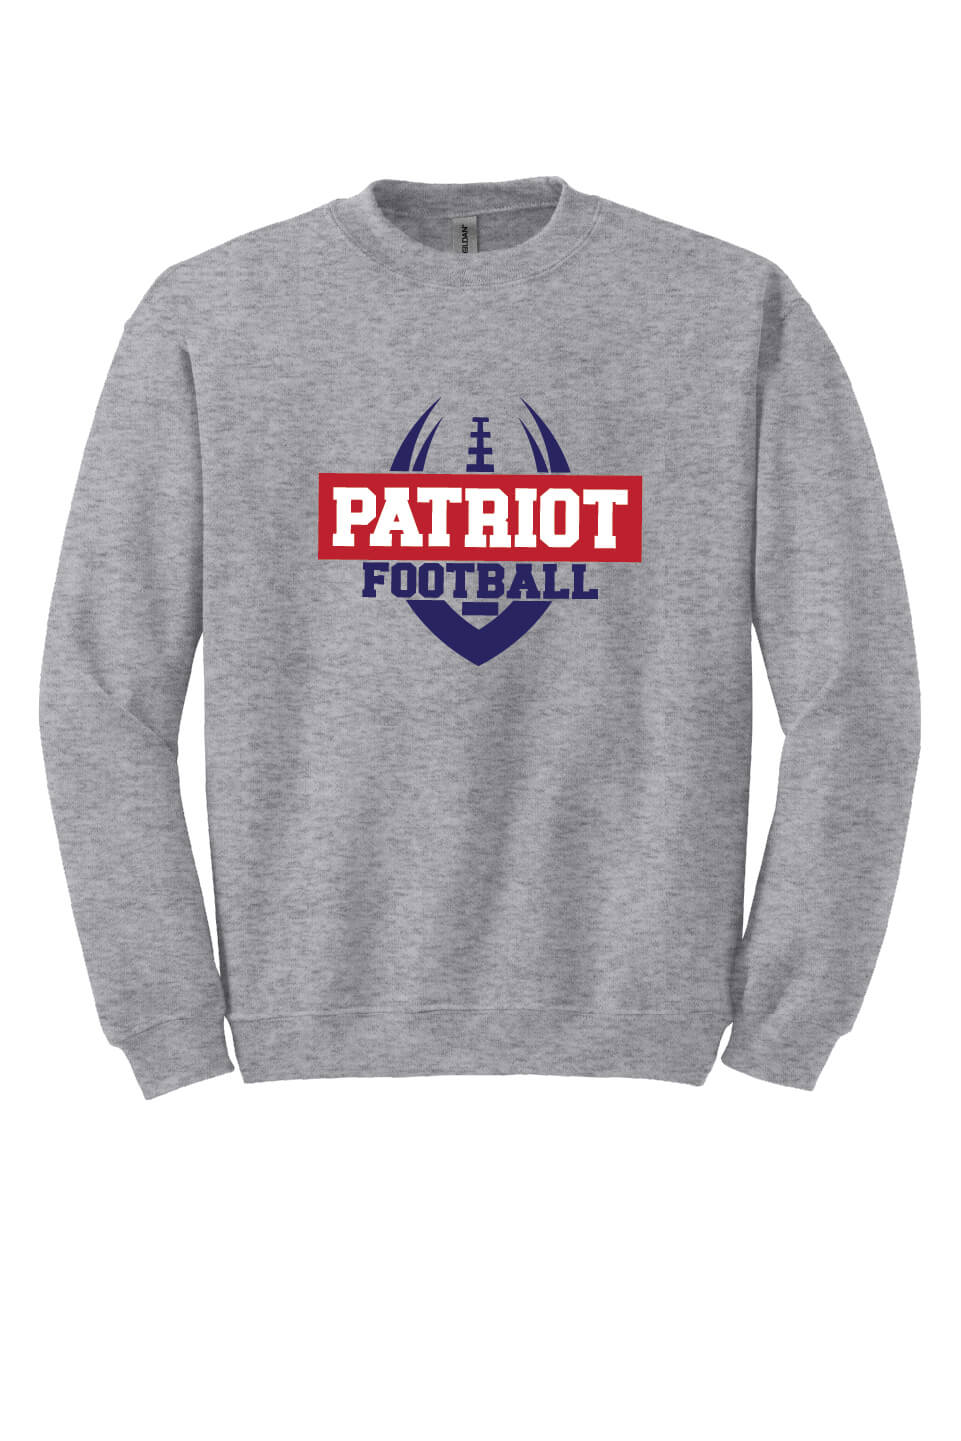 Patriot Football Crewneck Sweatshirt gray